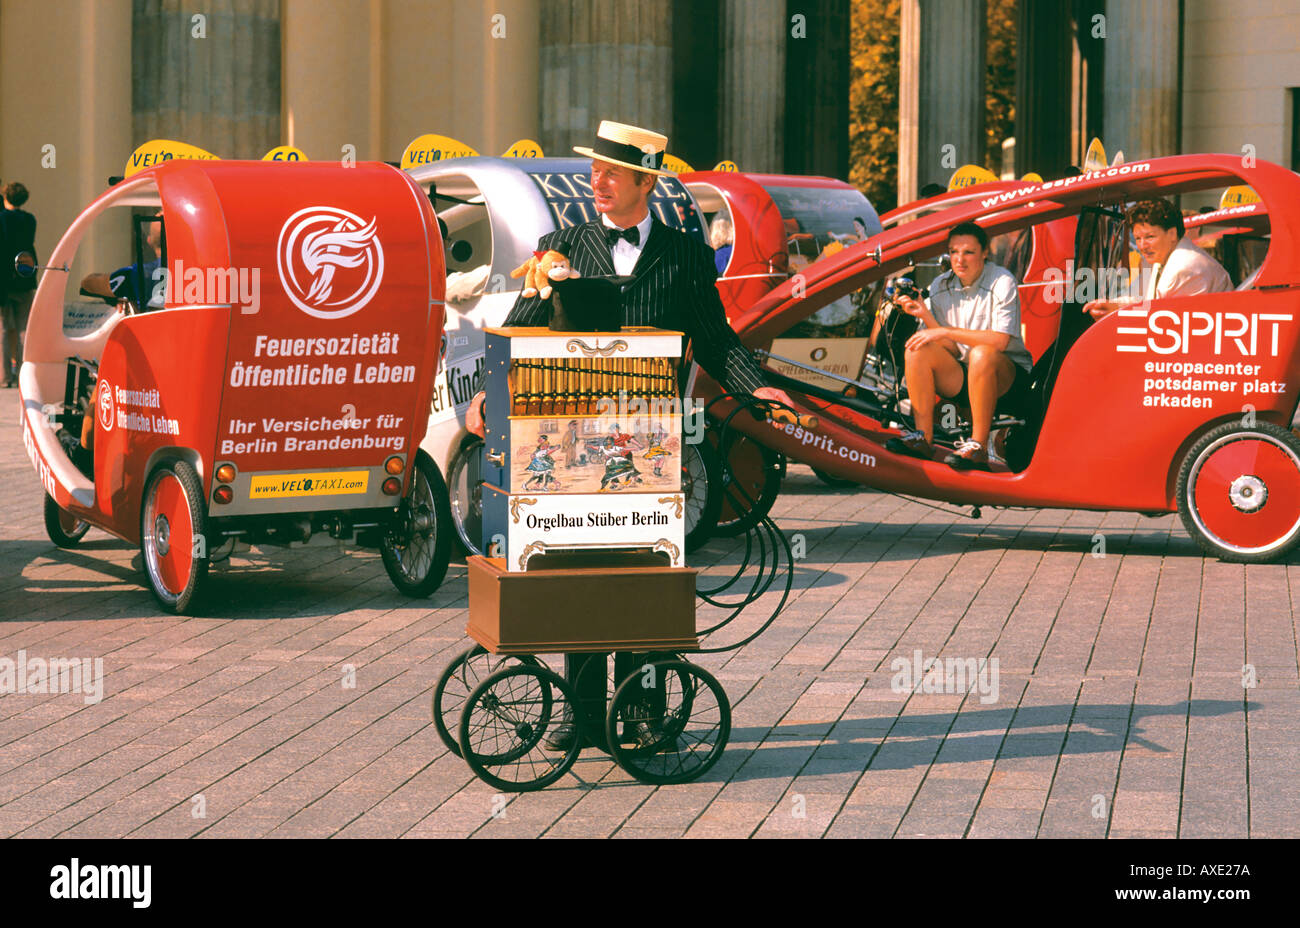 Organist with historic organ and Bike Taxis Pariser Platz Brandenburger Tor Berlin Germany Stock Photo